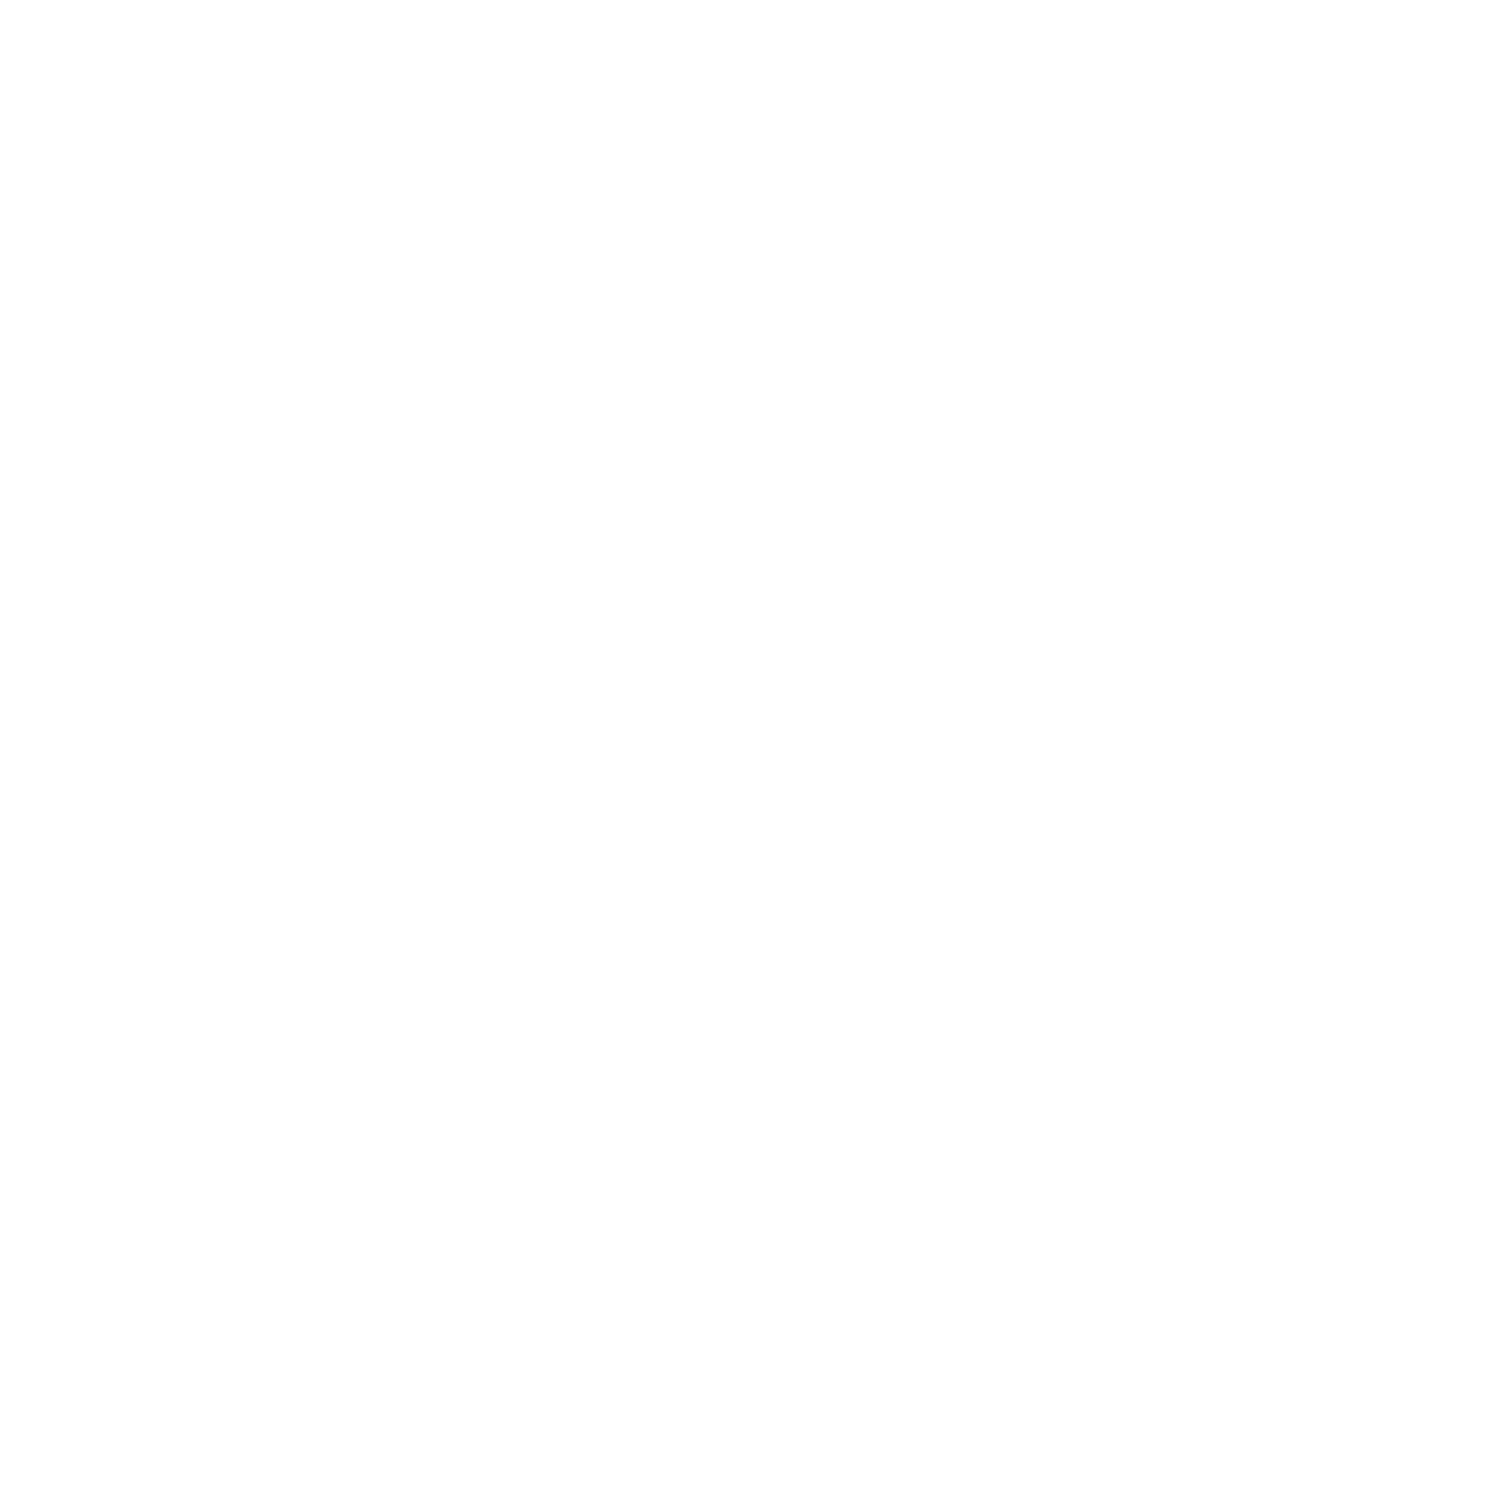 Rowan County CVB